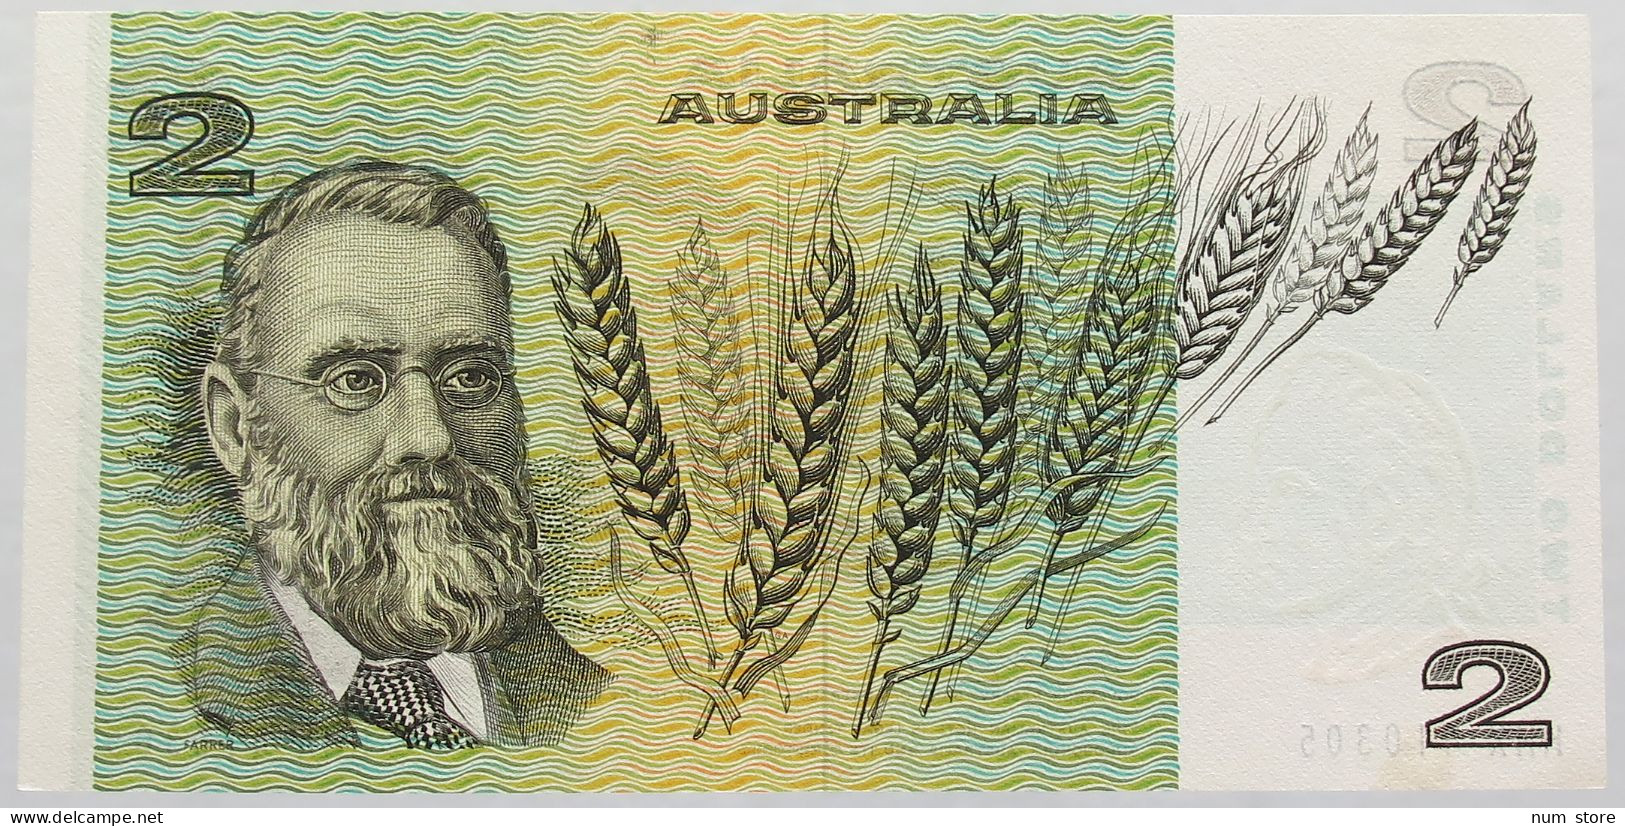 AUSTRALIA 2 DOLLARS 1983 TOP #alb016 0475 - 1974-94 Australia Reserve Bank (paper Notes)